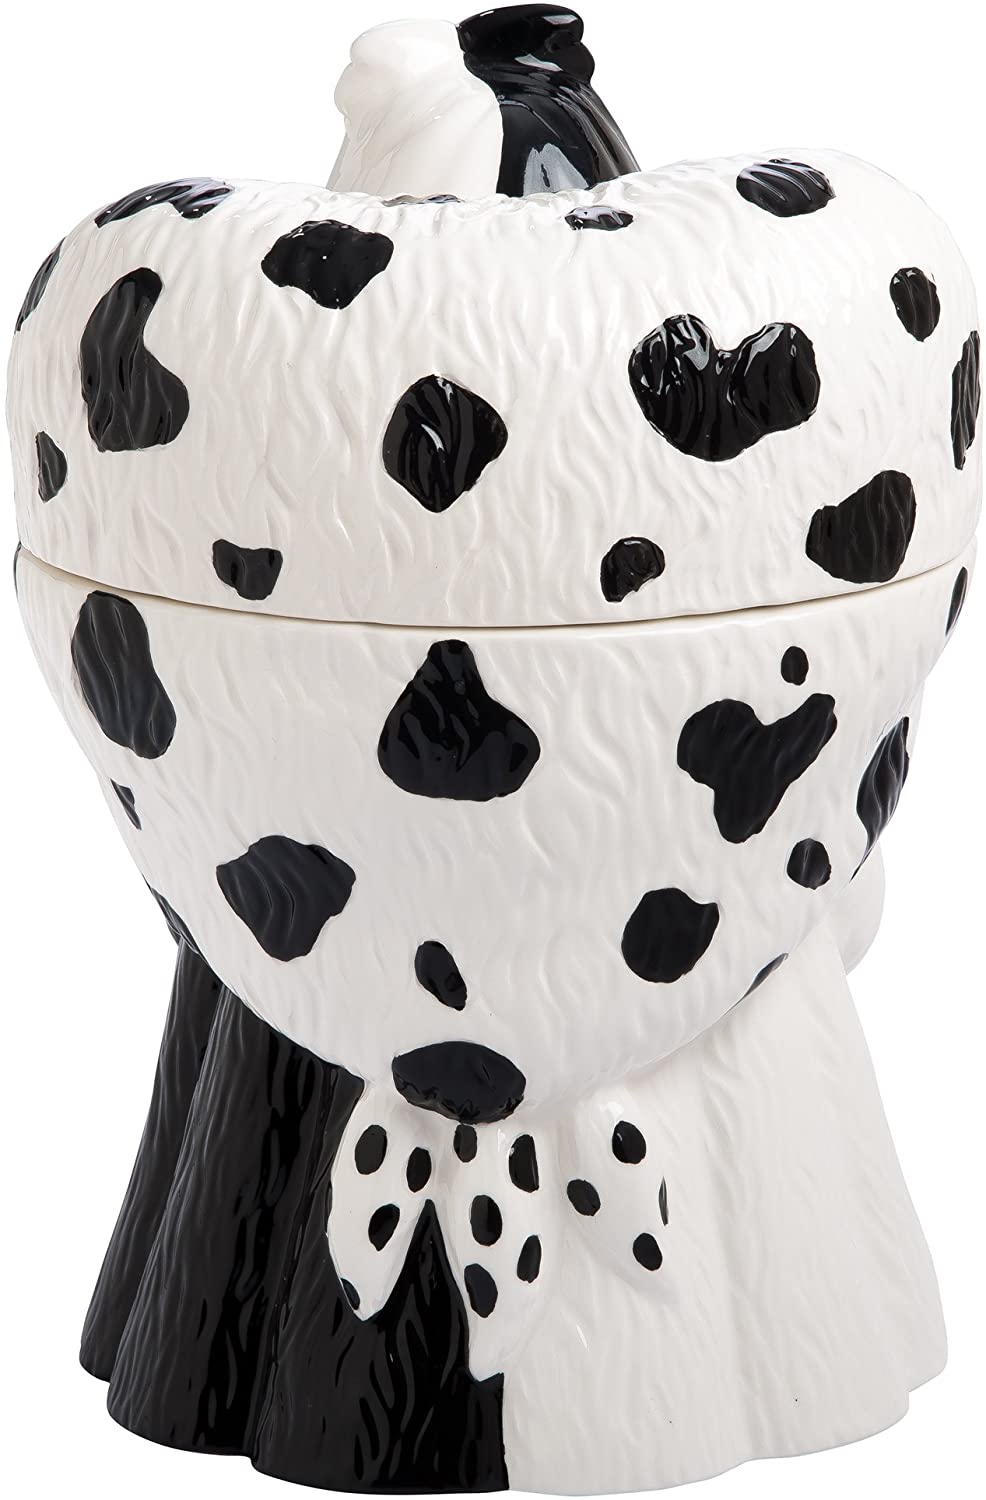 Disney's Cruella De Vil Sculpted Ceramic Cookie Jar